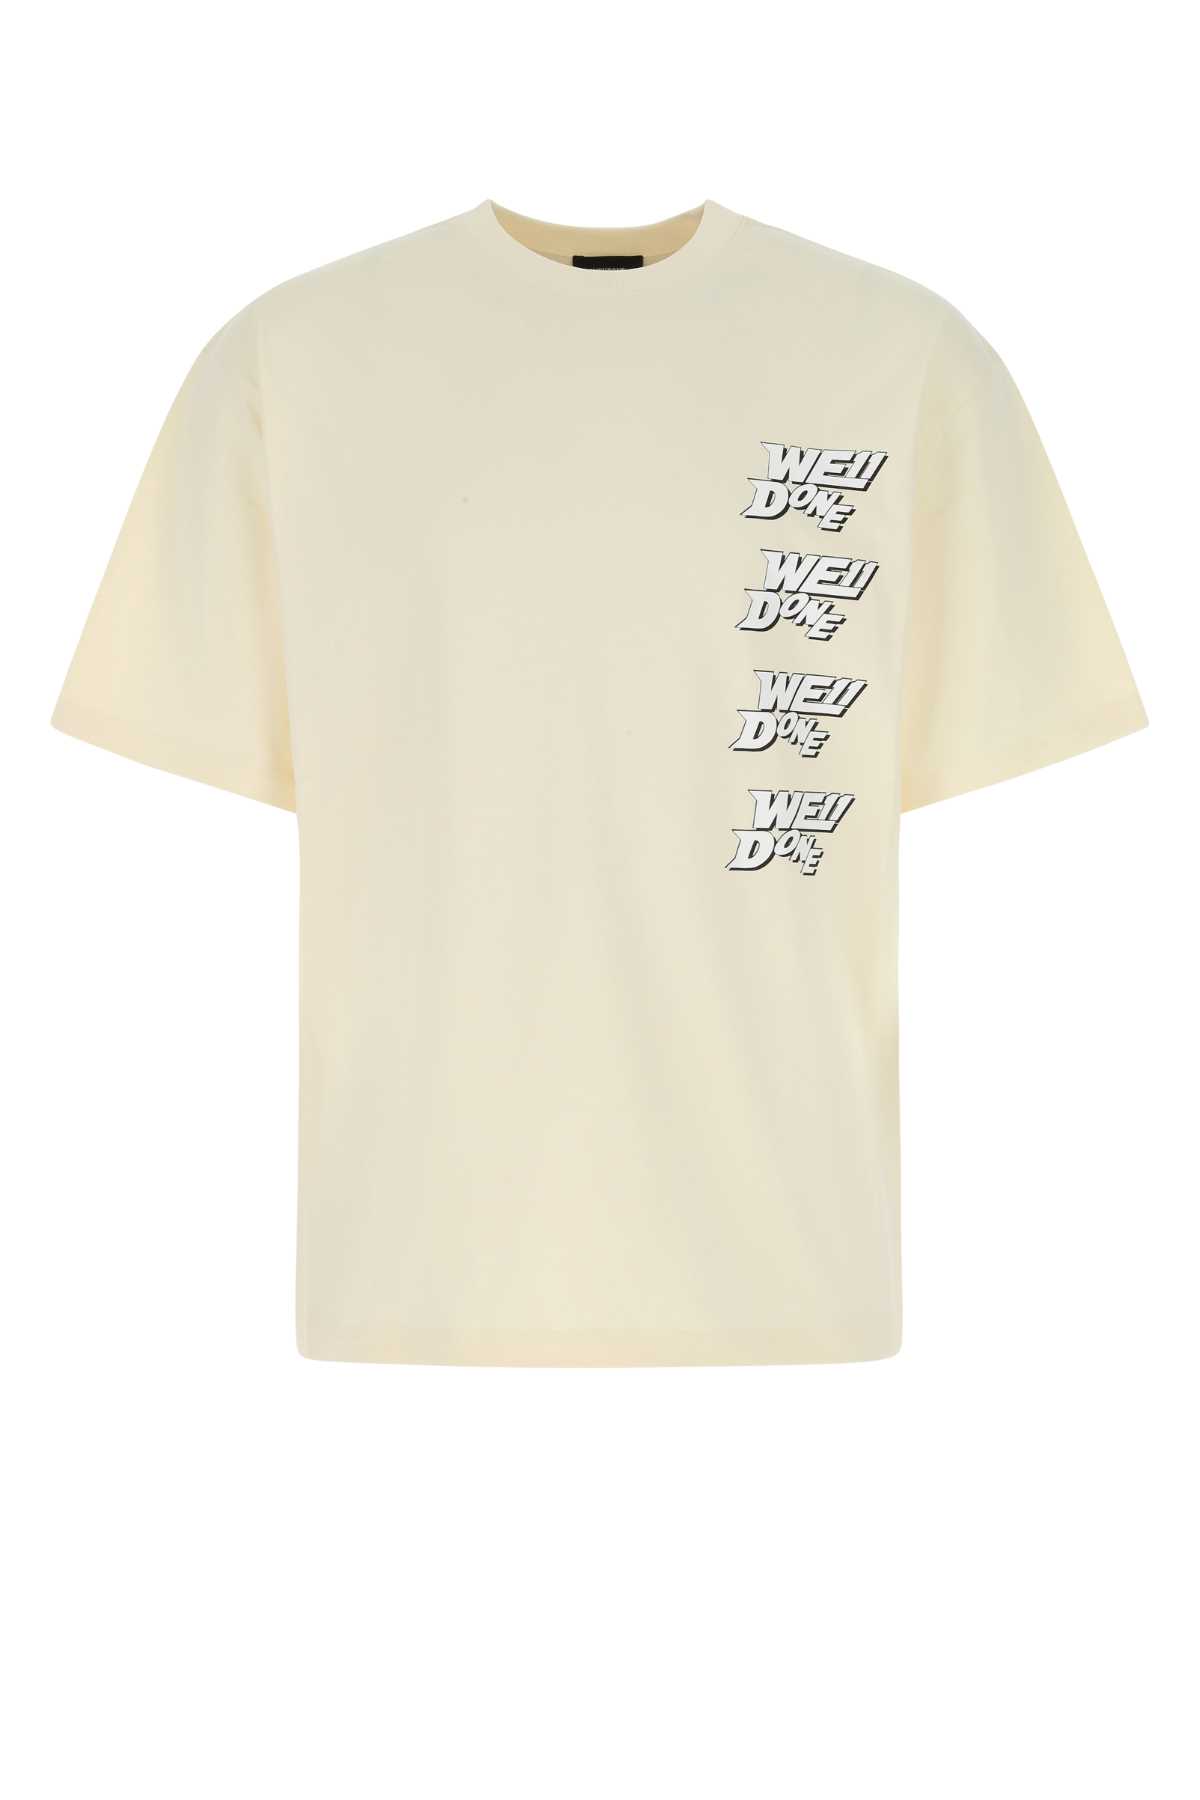 WE11 DONE Ivory Cotton Oversize T-shirt